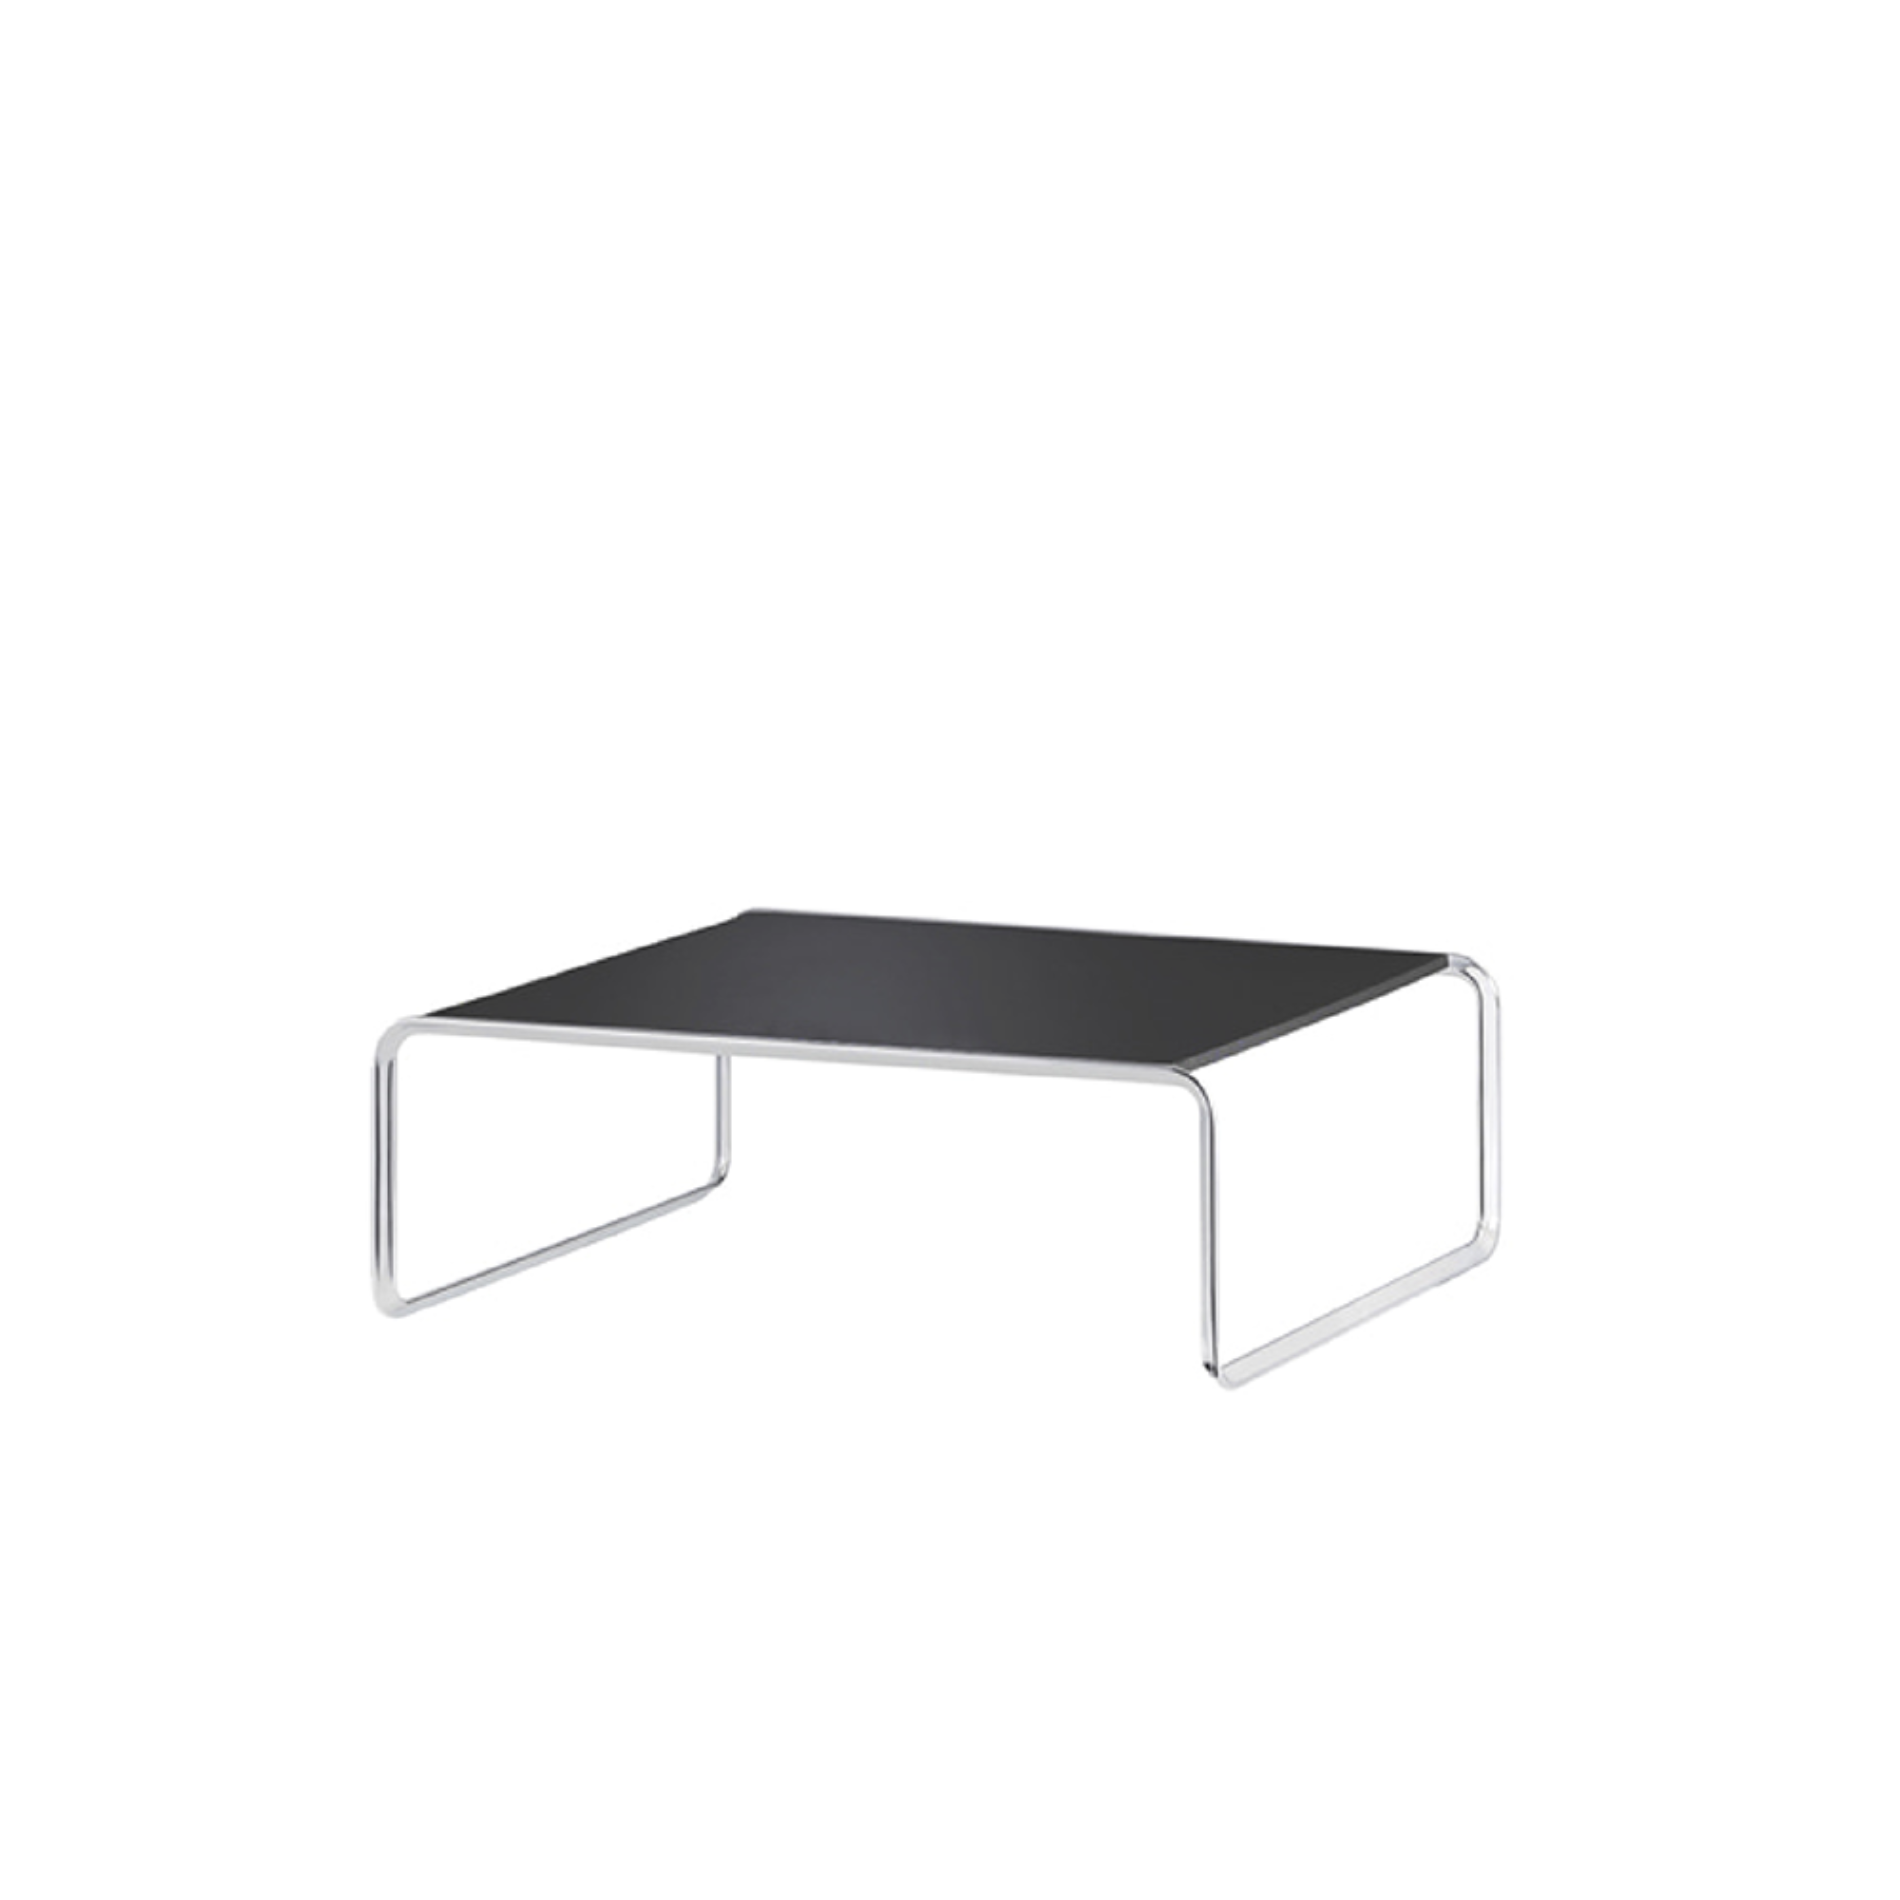 TECTA K1A Oblique Couch Table - Black 79Cm